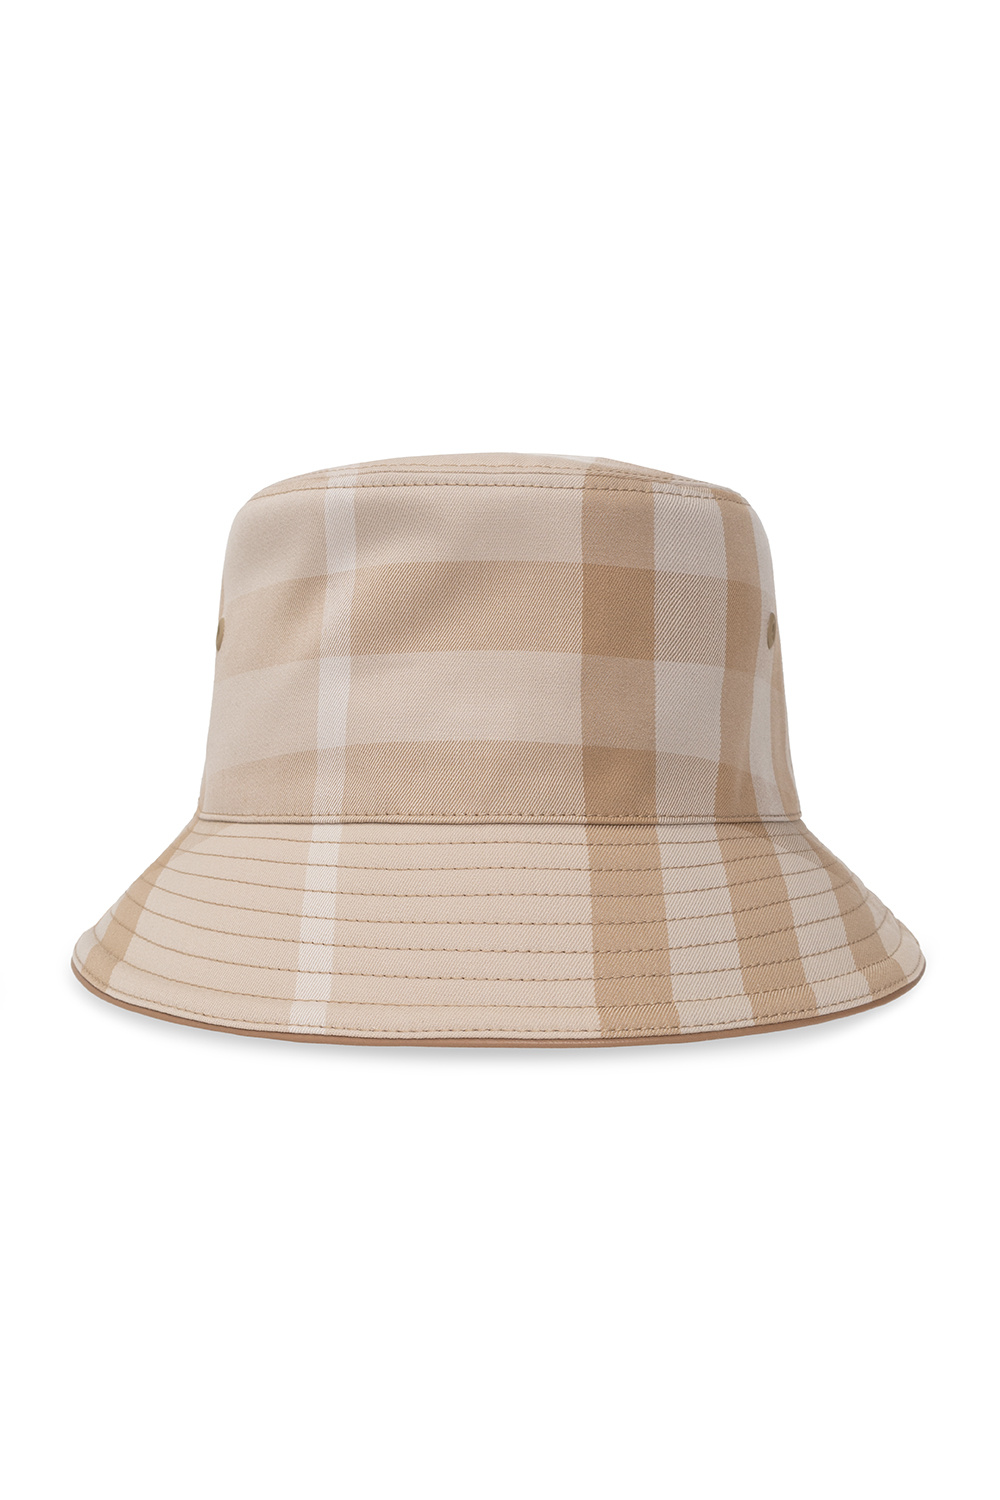 Burberry Checked bucket Tea hat